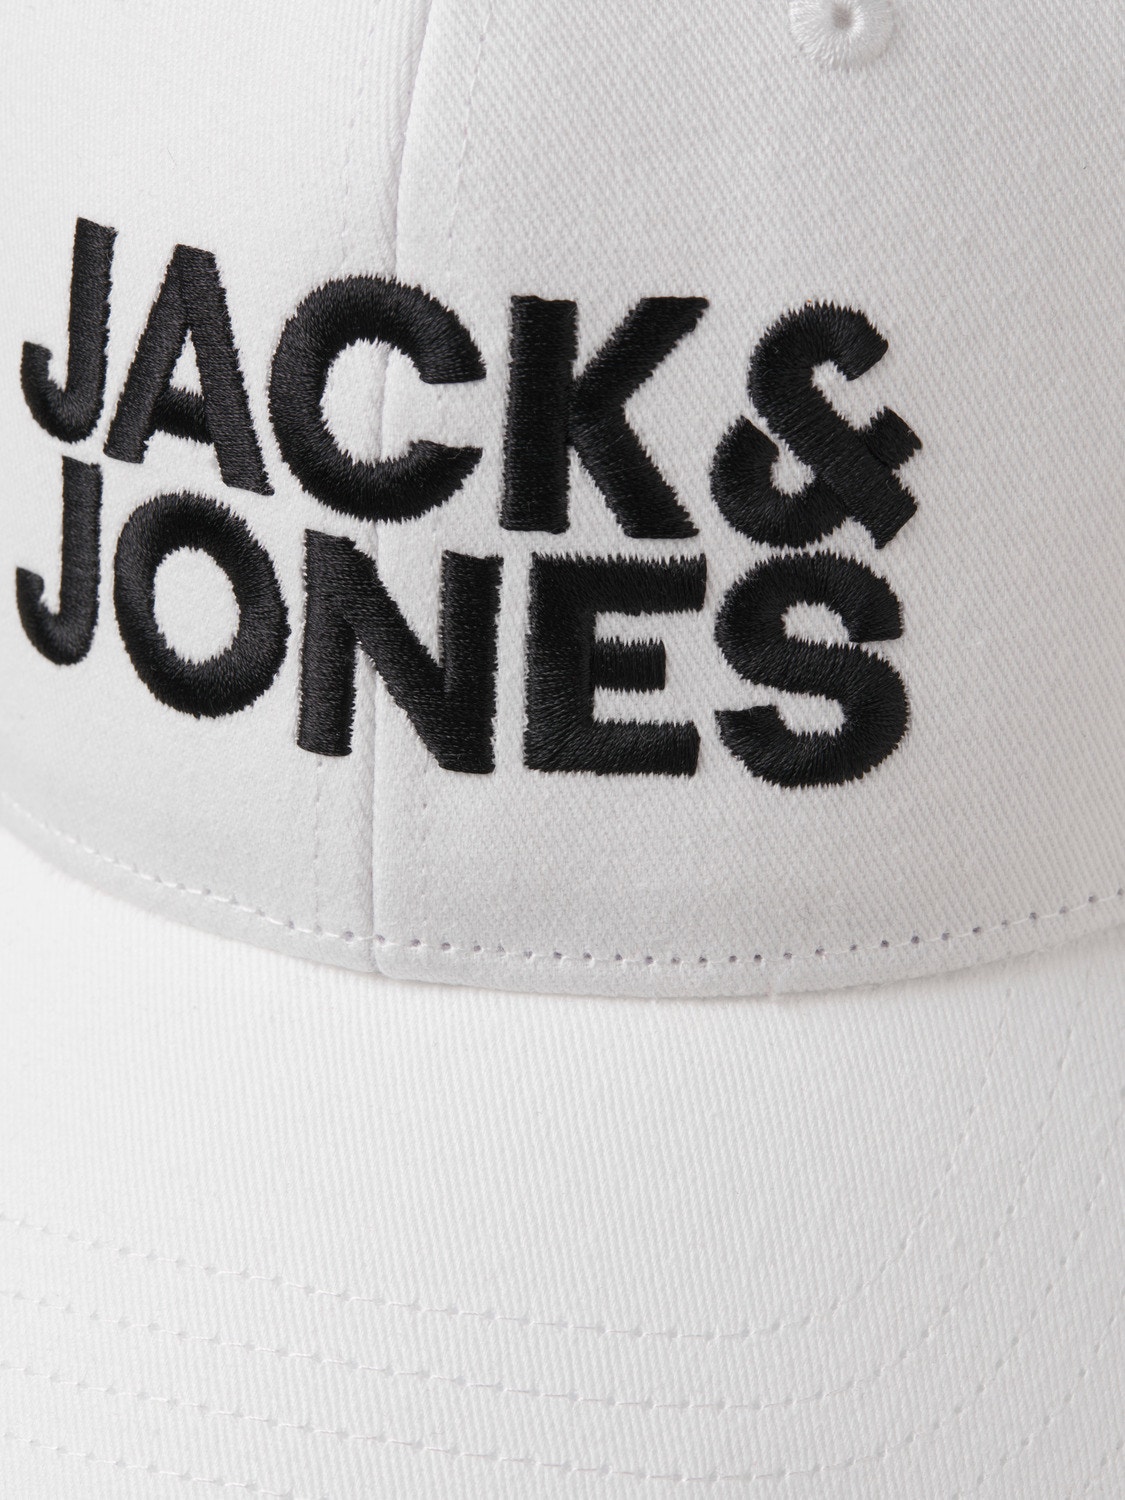 Jack & Jones Boné de Beisebol -White - 12254296